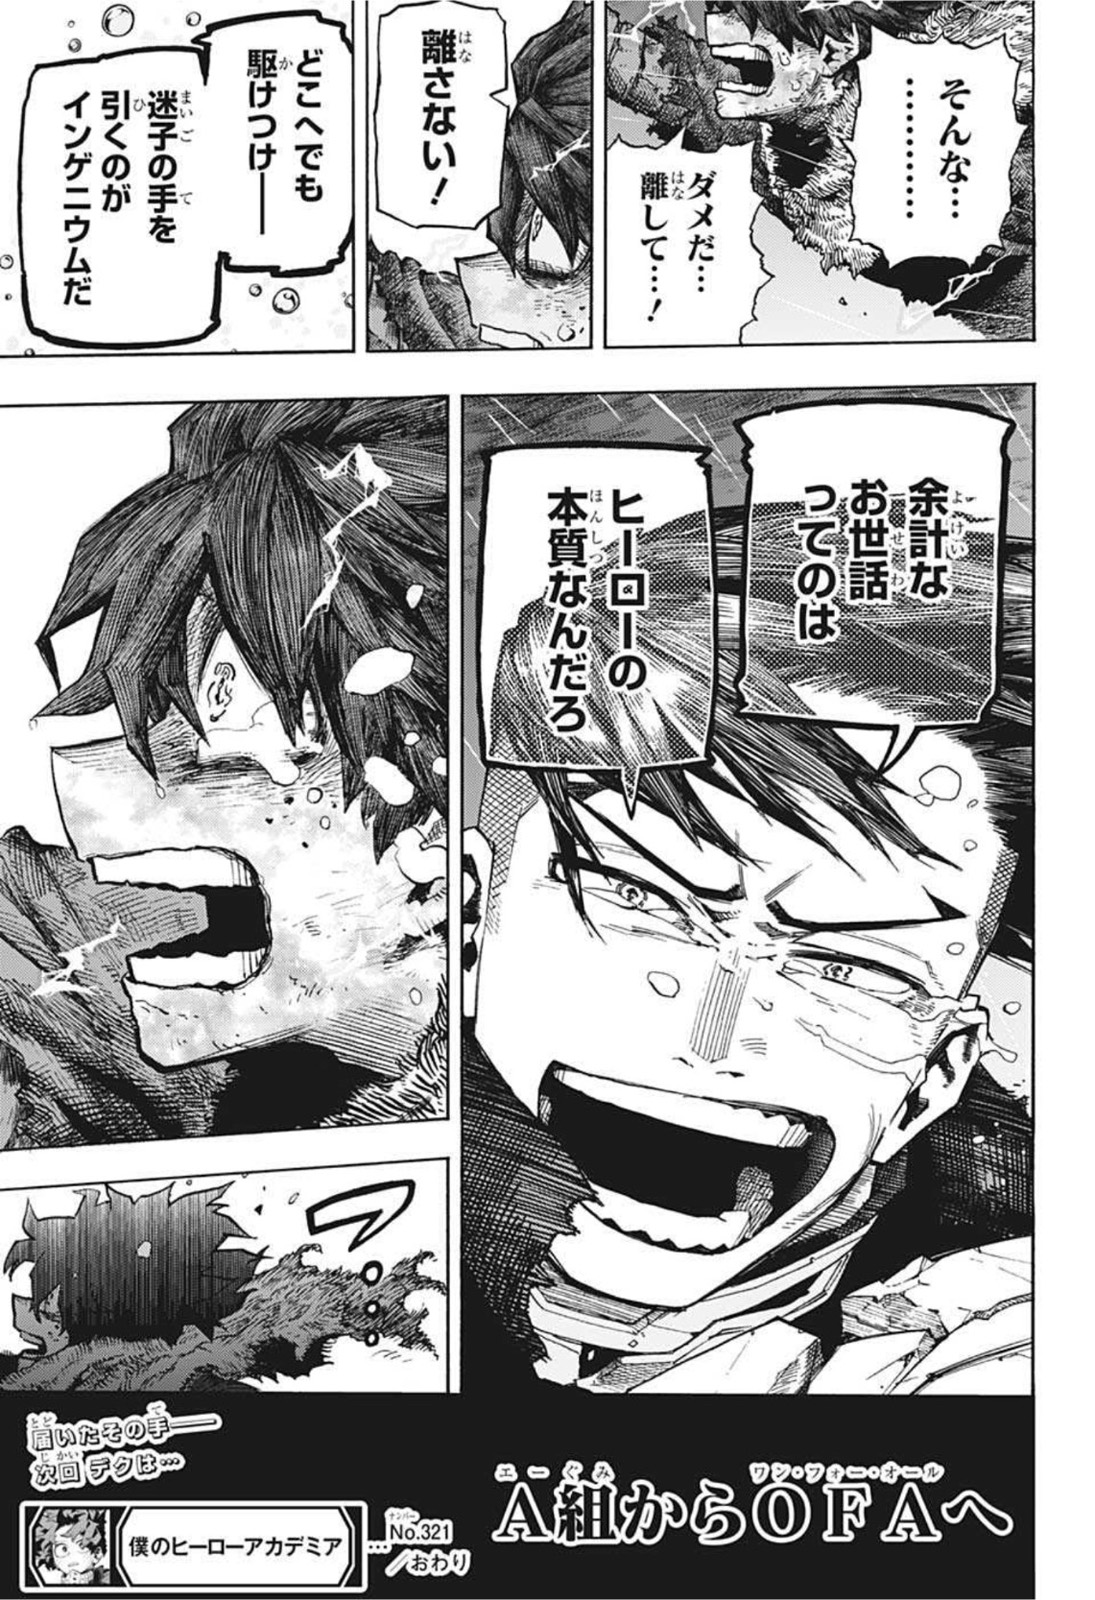 Boku no Hero Academia - Chapter 321 - Page 15